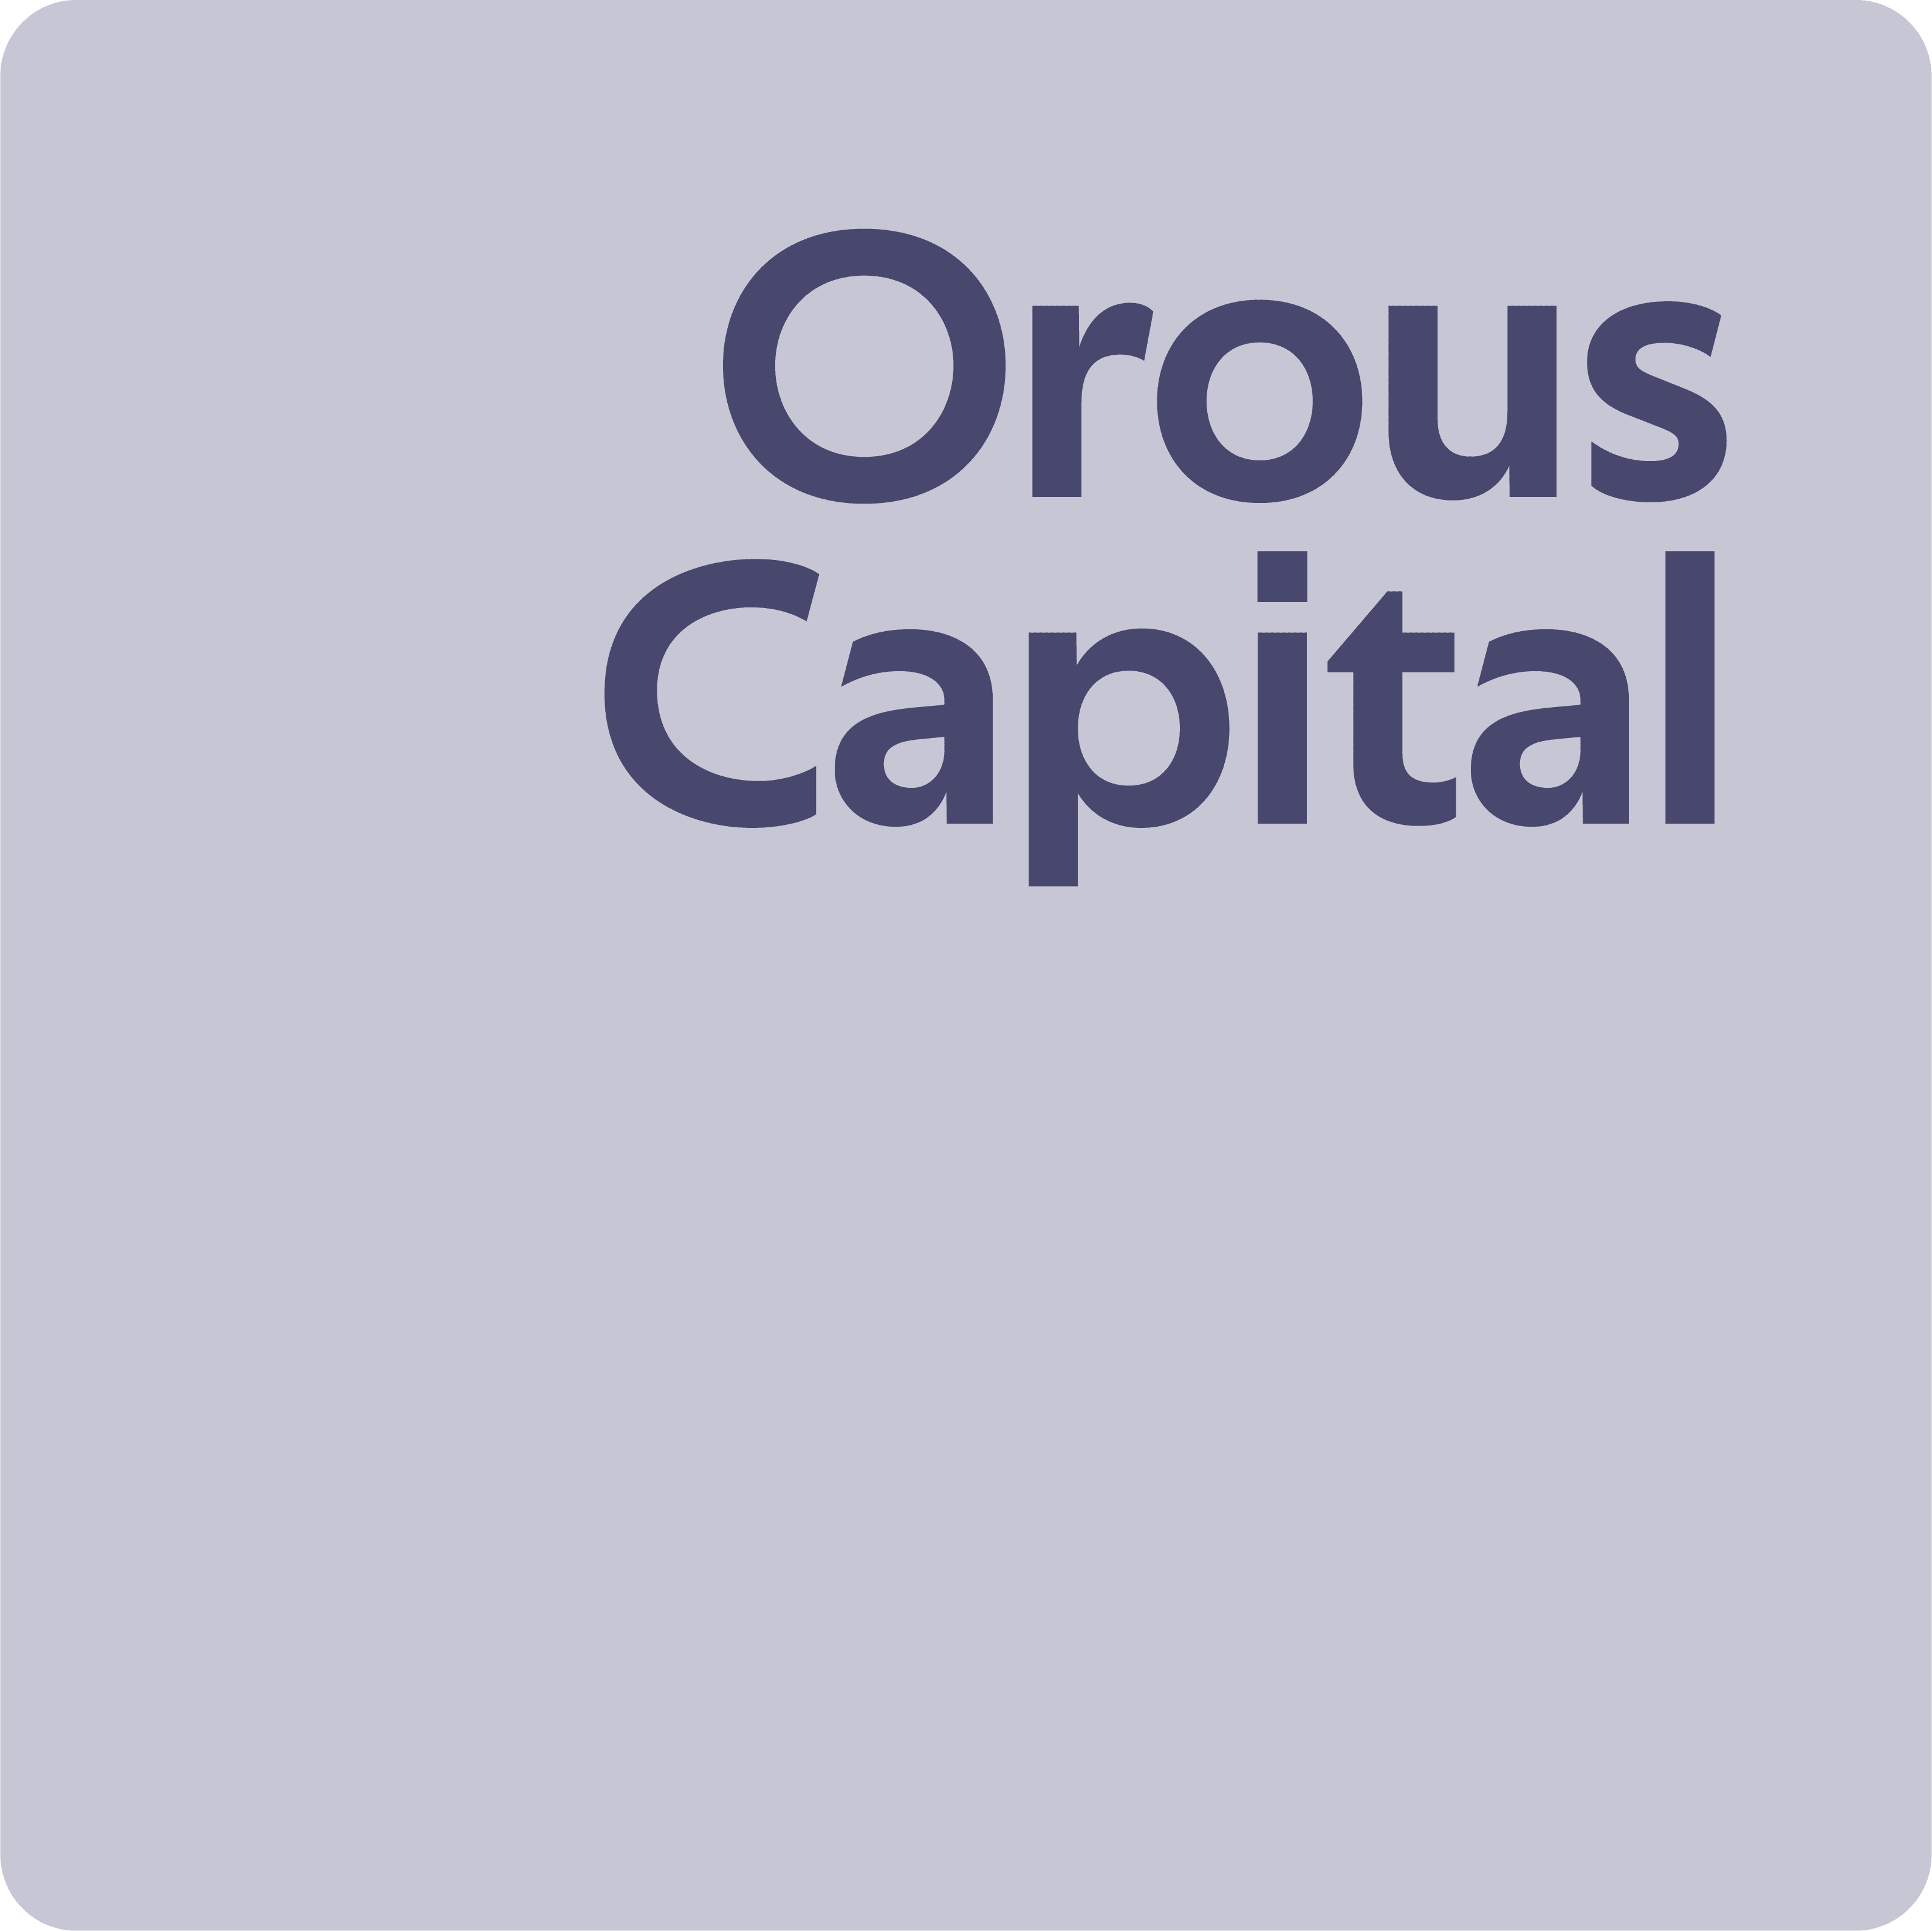 Orous capital logo header